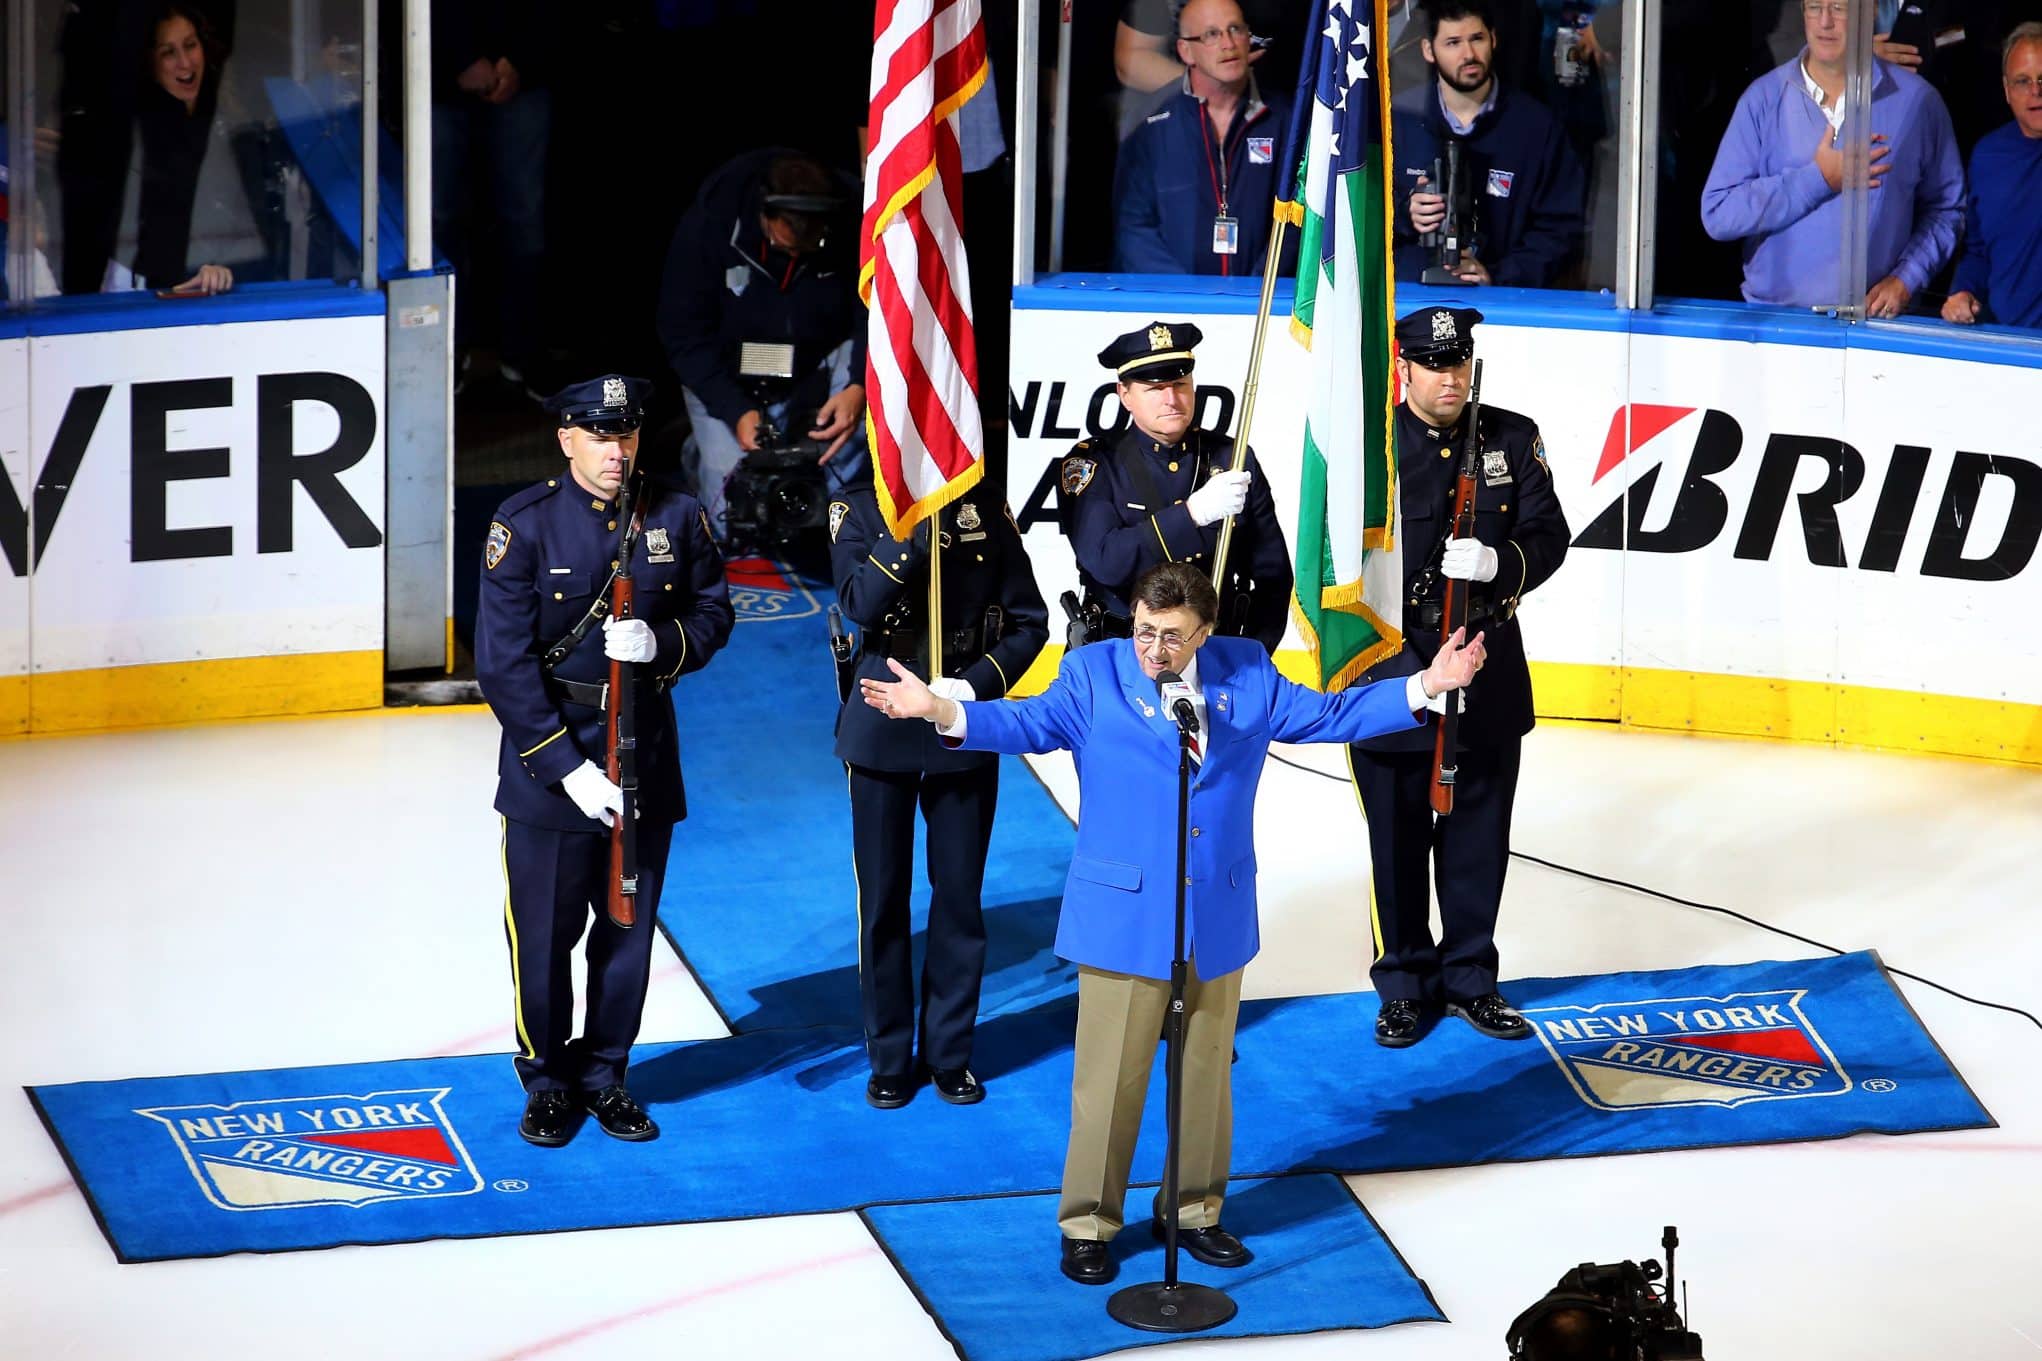 New York Rangers honor John Amirante